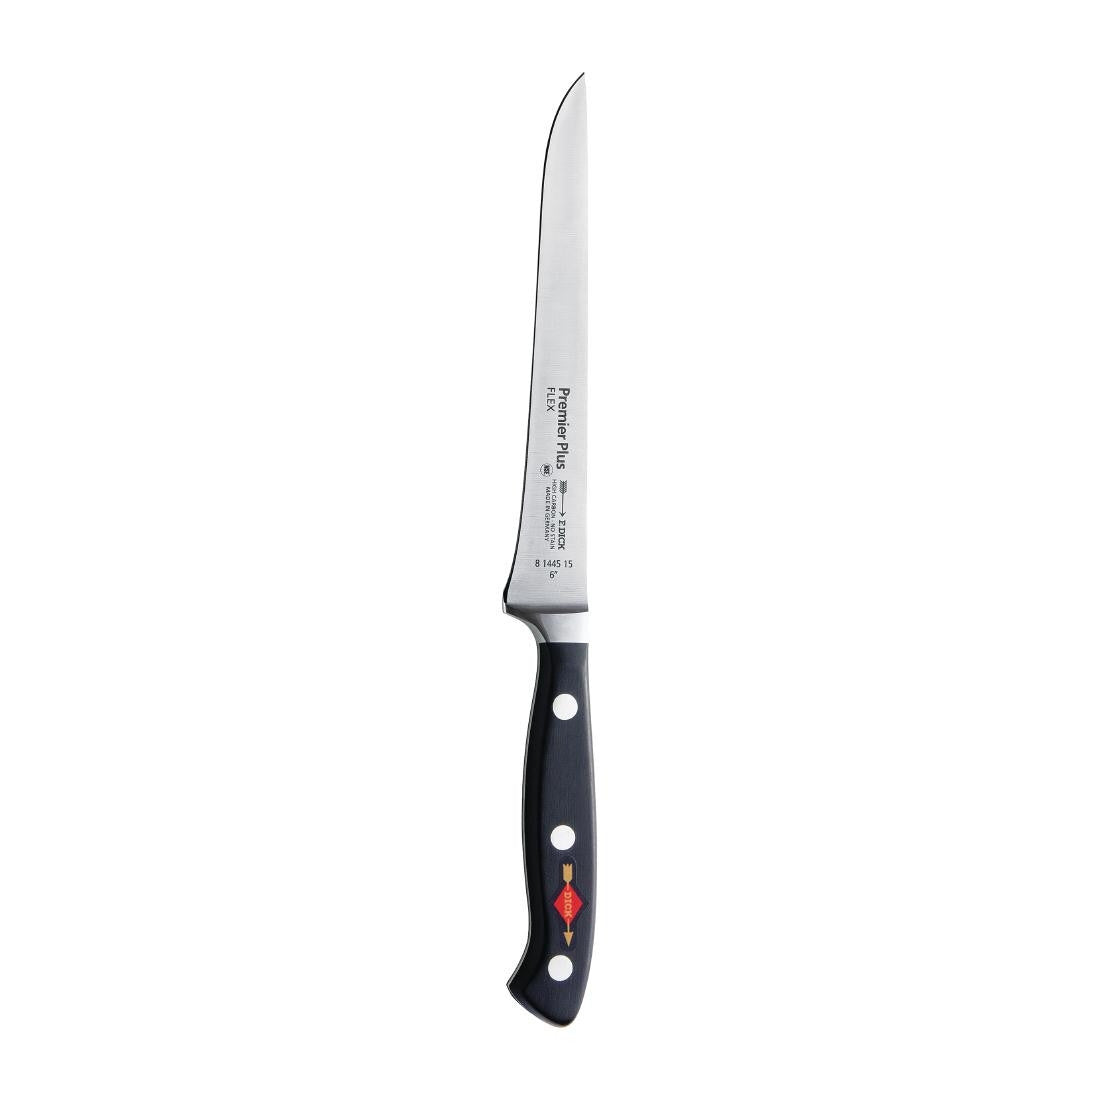 Dick Premier Plus Flexible Boning Knife 6 Inch Kitchen